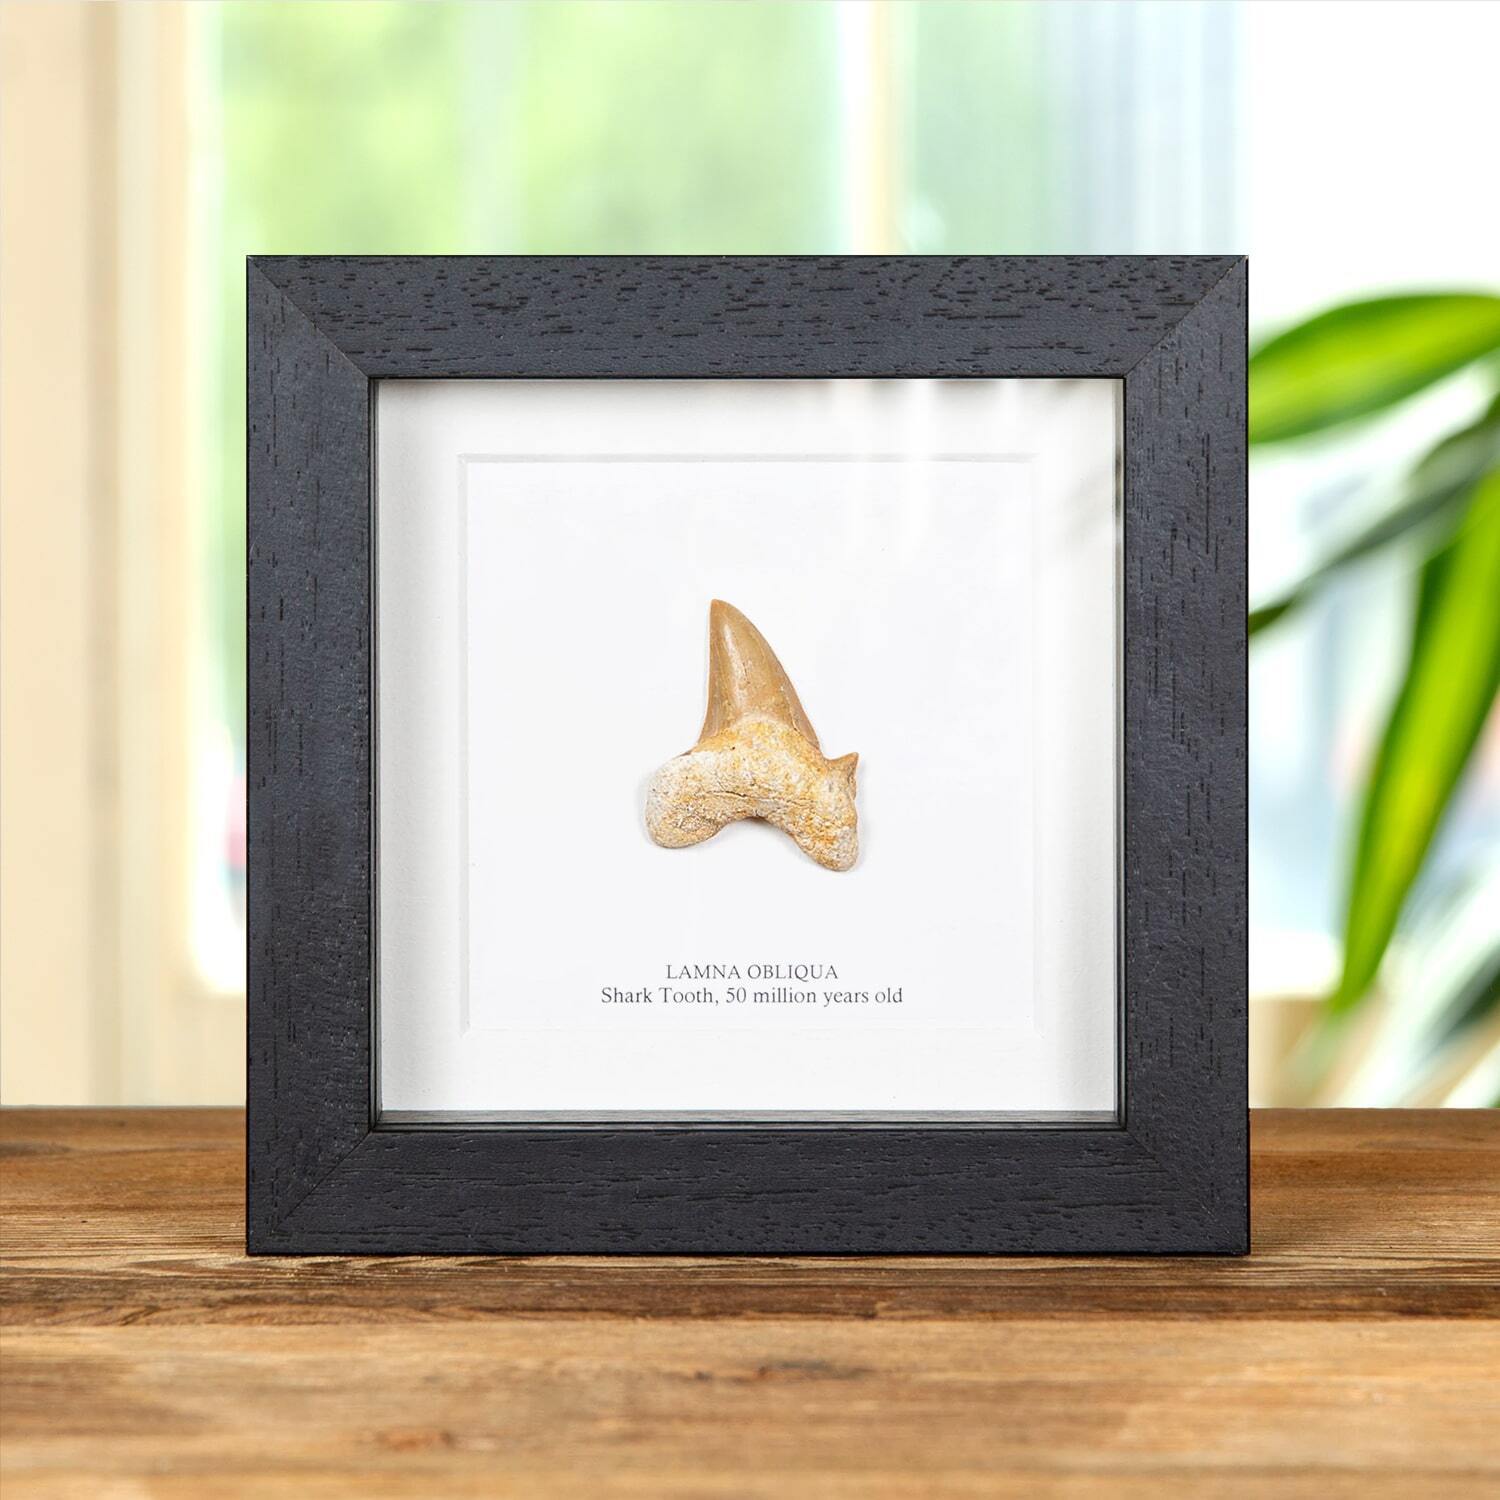 Taxidermy Shark Tooth Fossil Frame(Lamna obliqua)